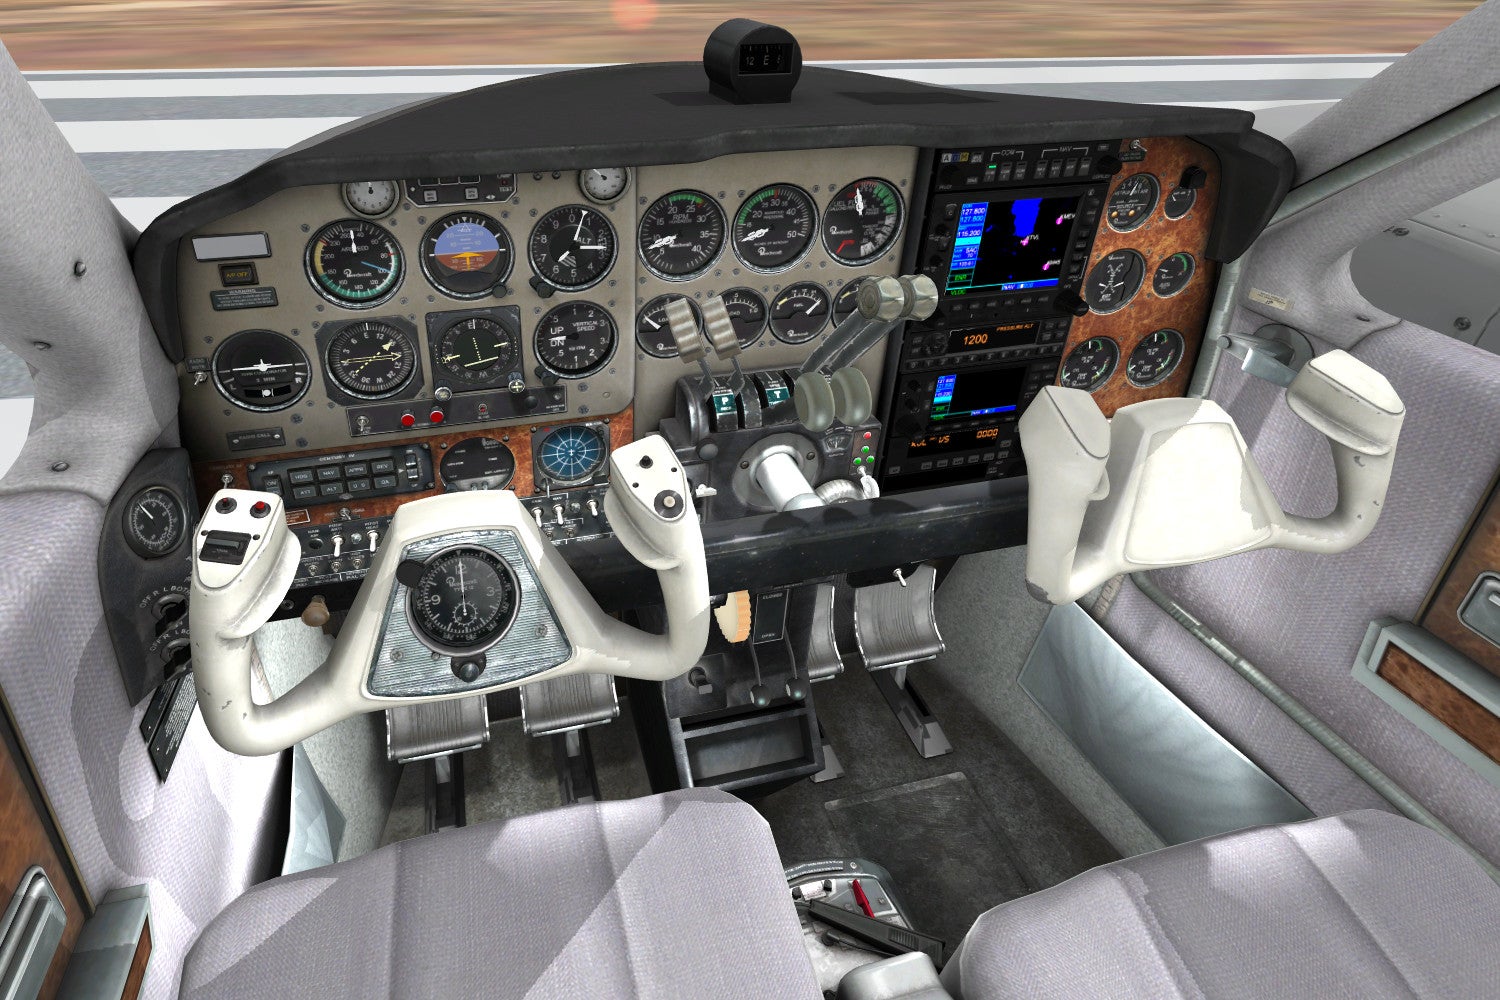 Microsoft flight simulator ps4 controller